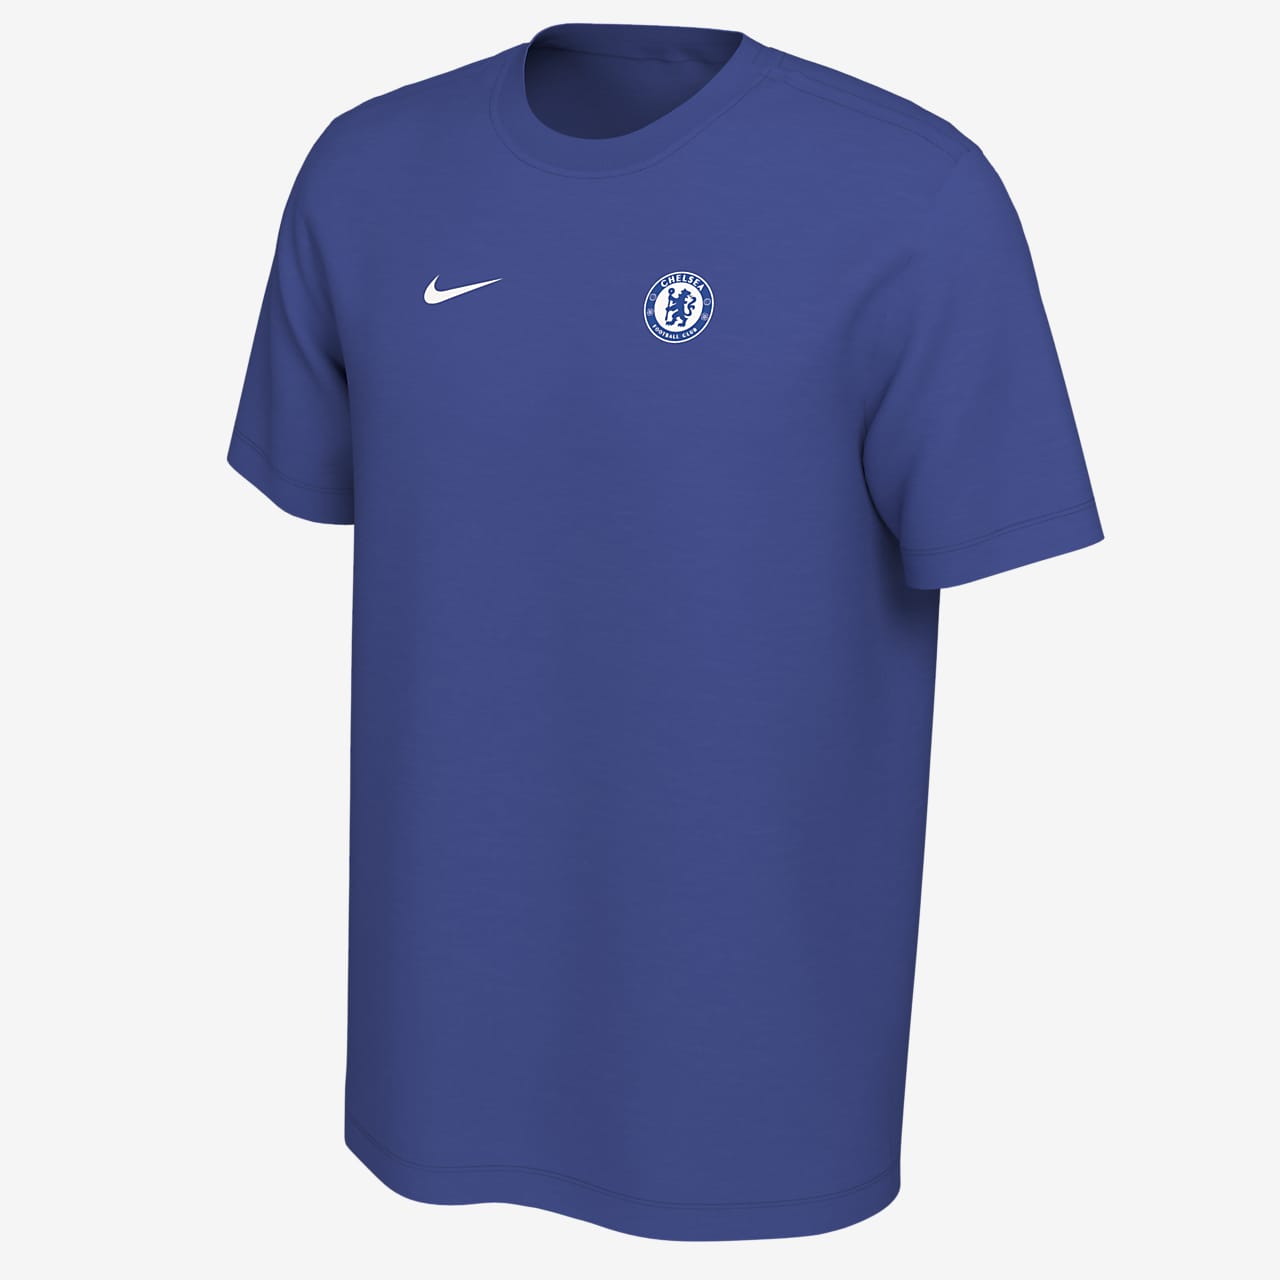 Chelsea FC (Pulisic) Men's Soccer T-Shirt. Nike.com